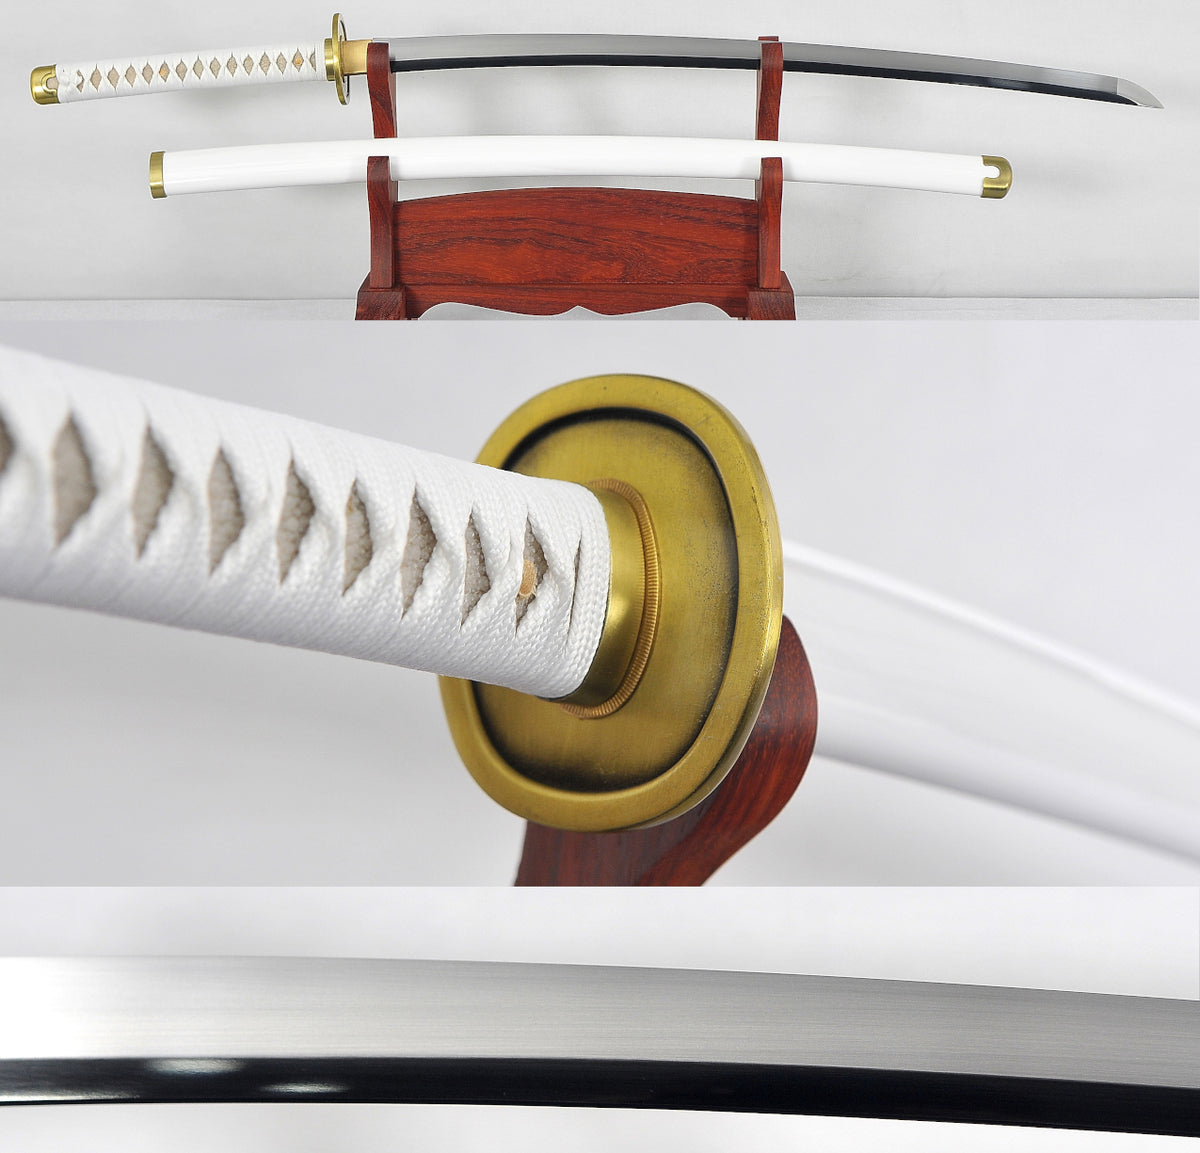 Anime Sword One Piece Sword Roronoa Zoro Katana Replica Sword Set Cosplay  Sword